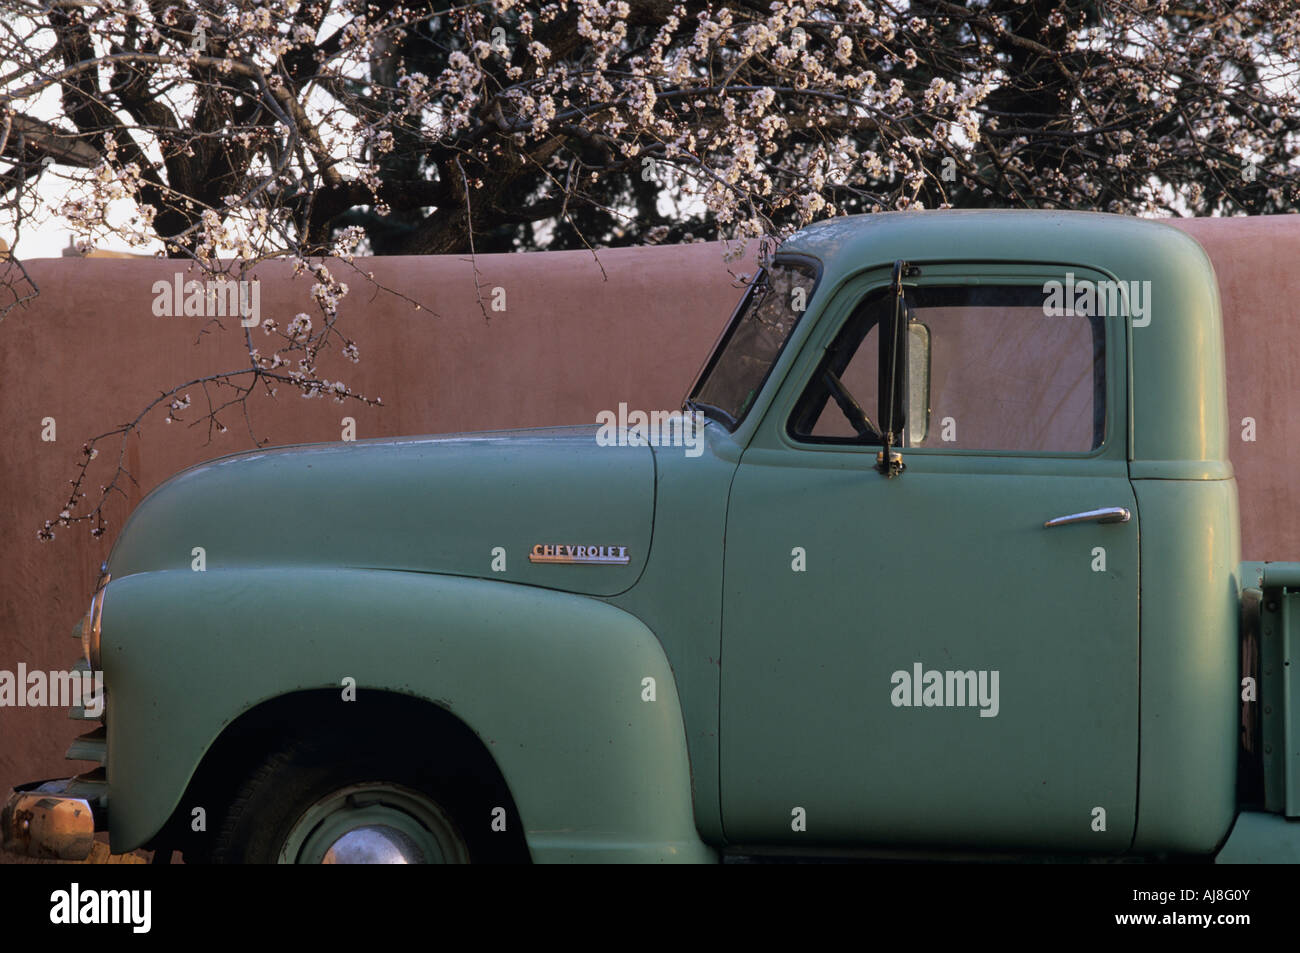 USA New Mexico Santa Fe Old 1950 s era Chevrolet pickup truck parked under cherry blossom tree beside adobe home Stock Photo